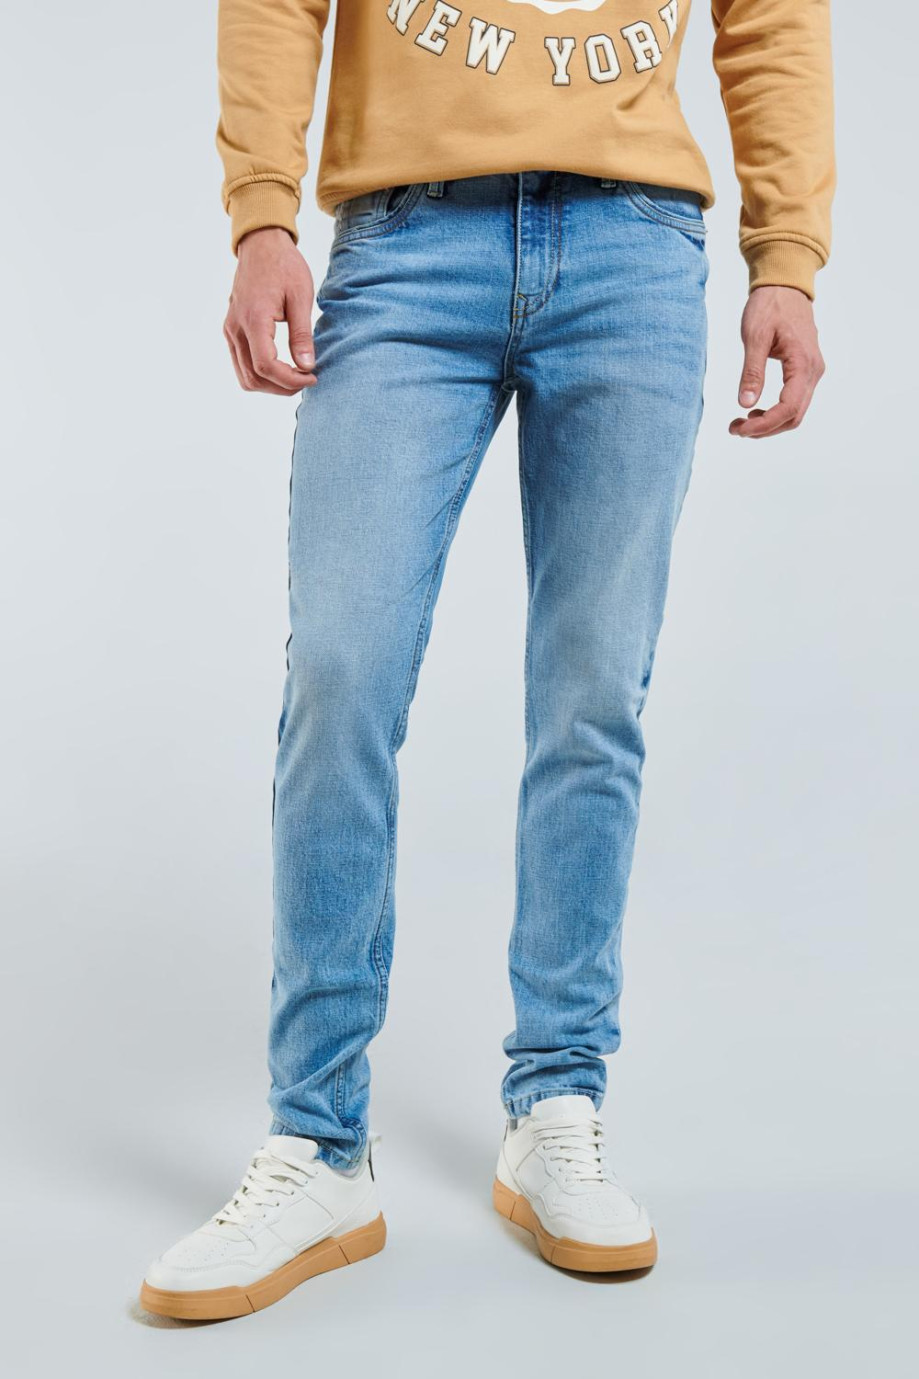 Jean skinny azul claro con tiro bajo, bolsillos y ajuste ceñido